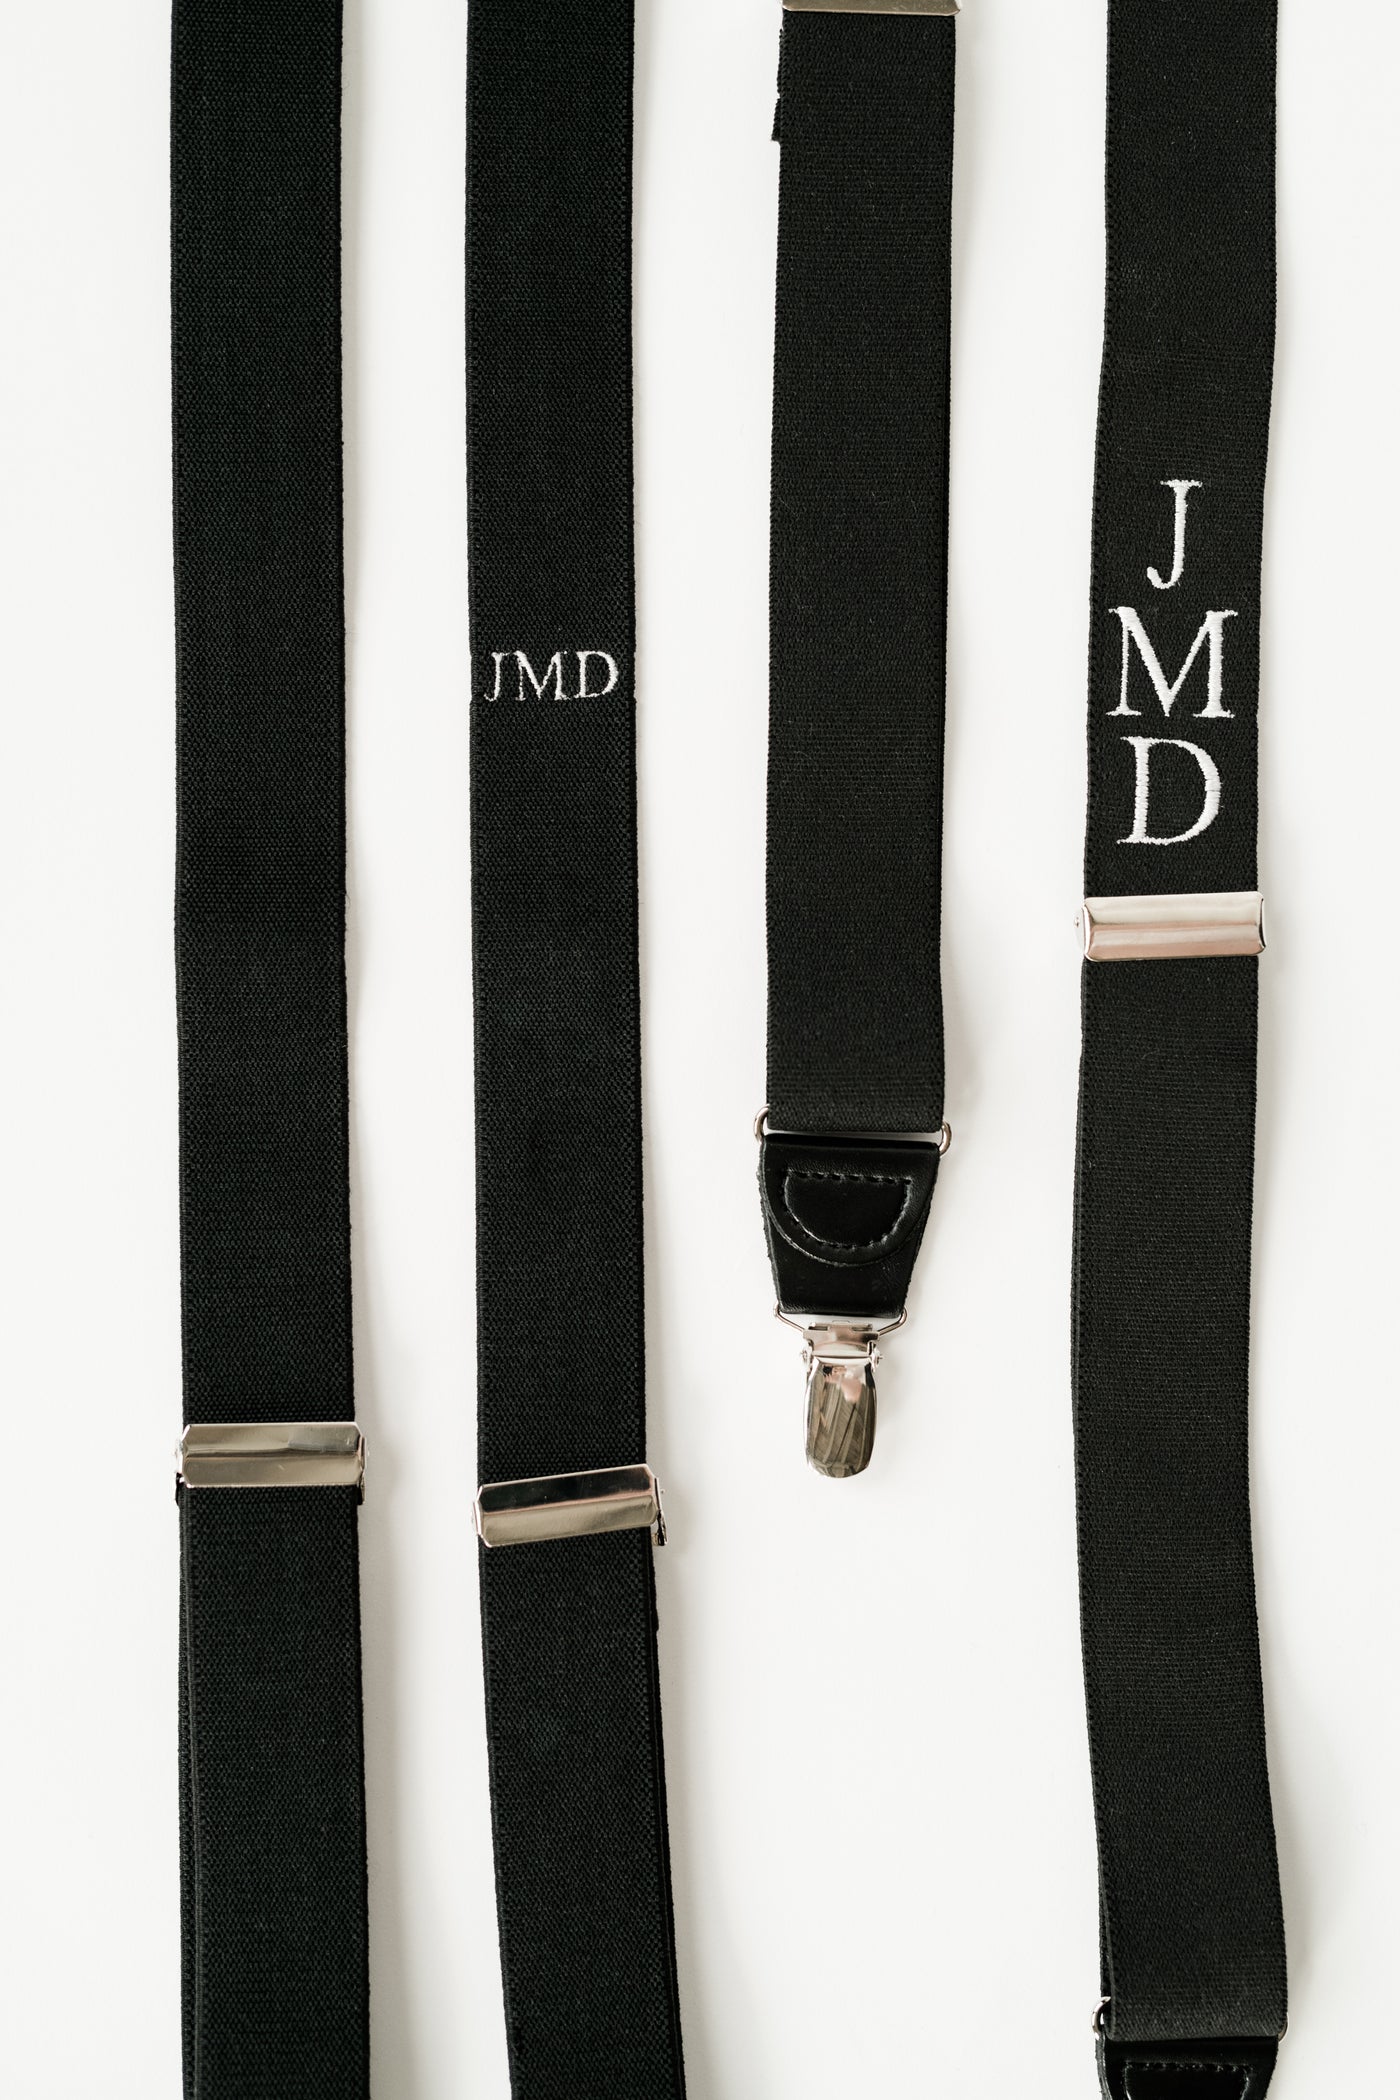 clip on monogram suspender with horizontal suspender and vertical monogram 